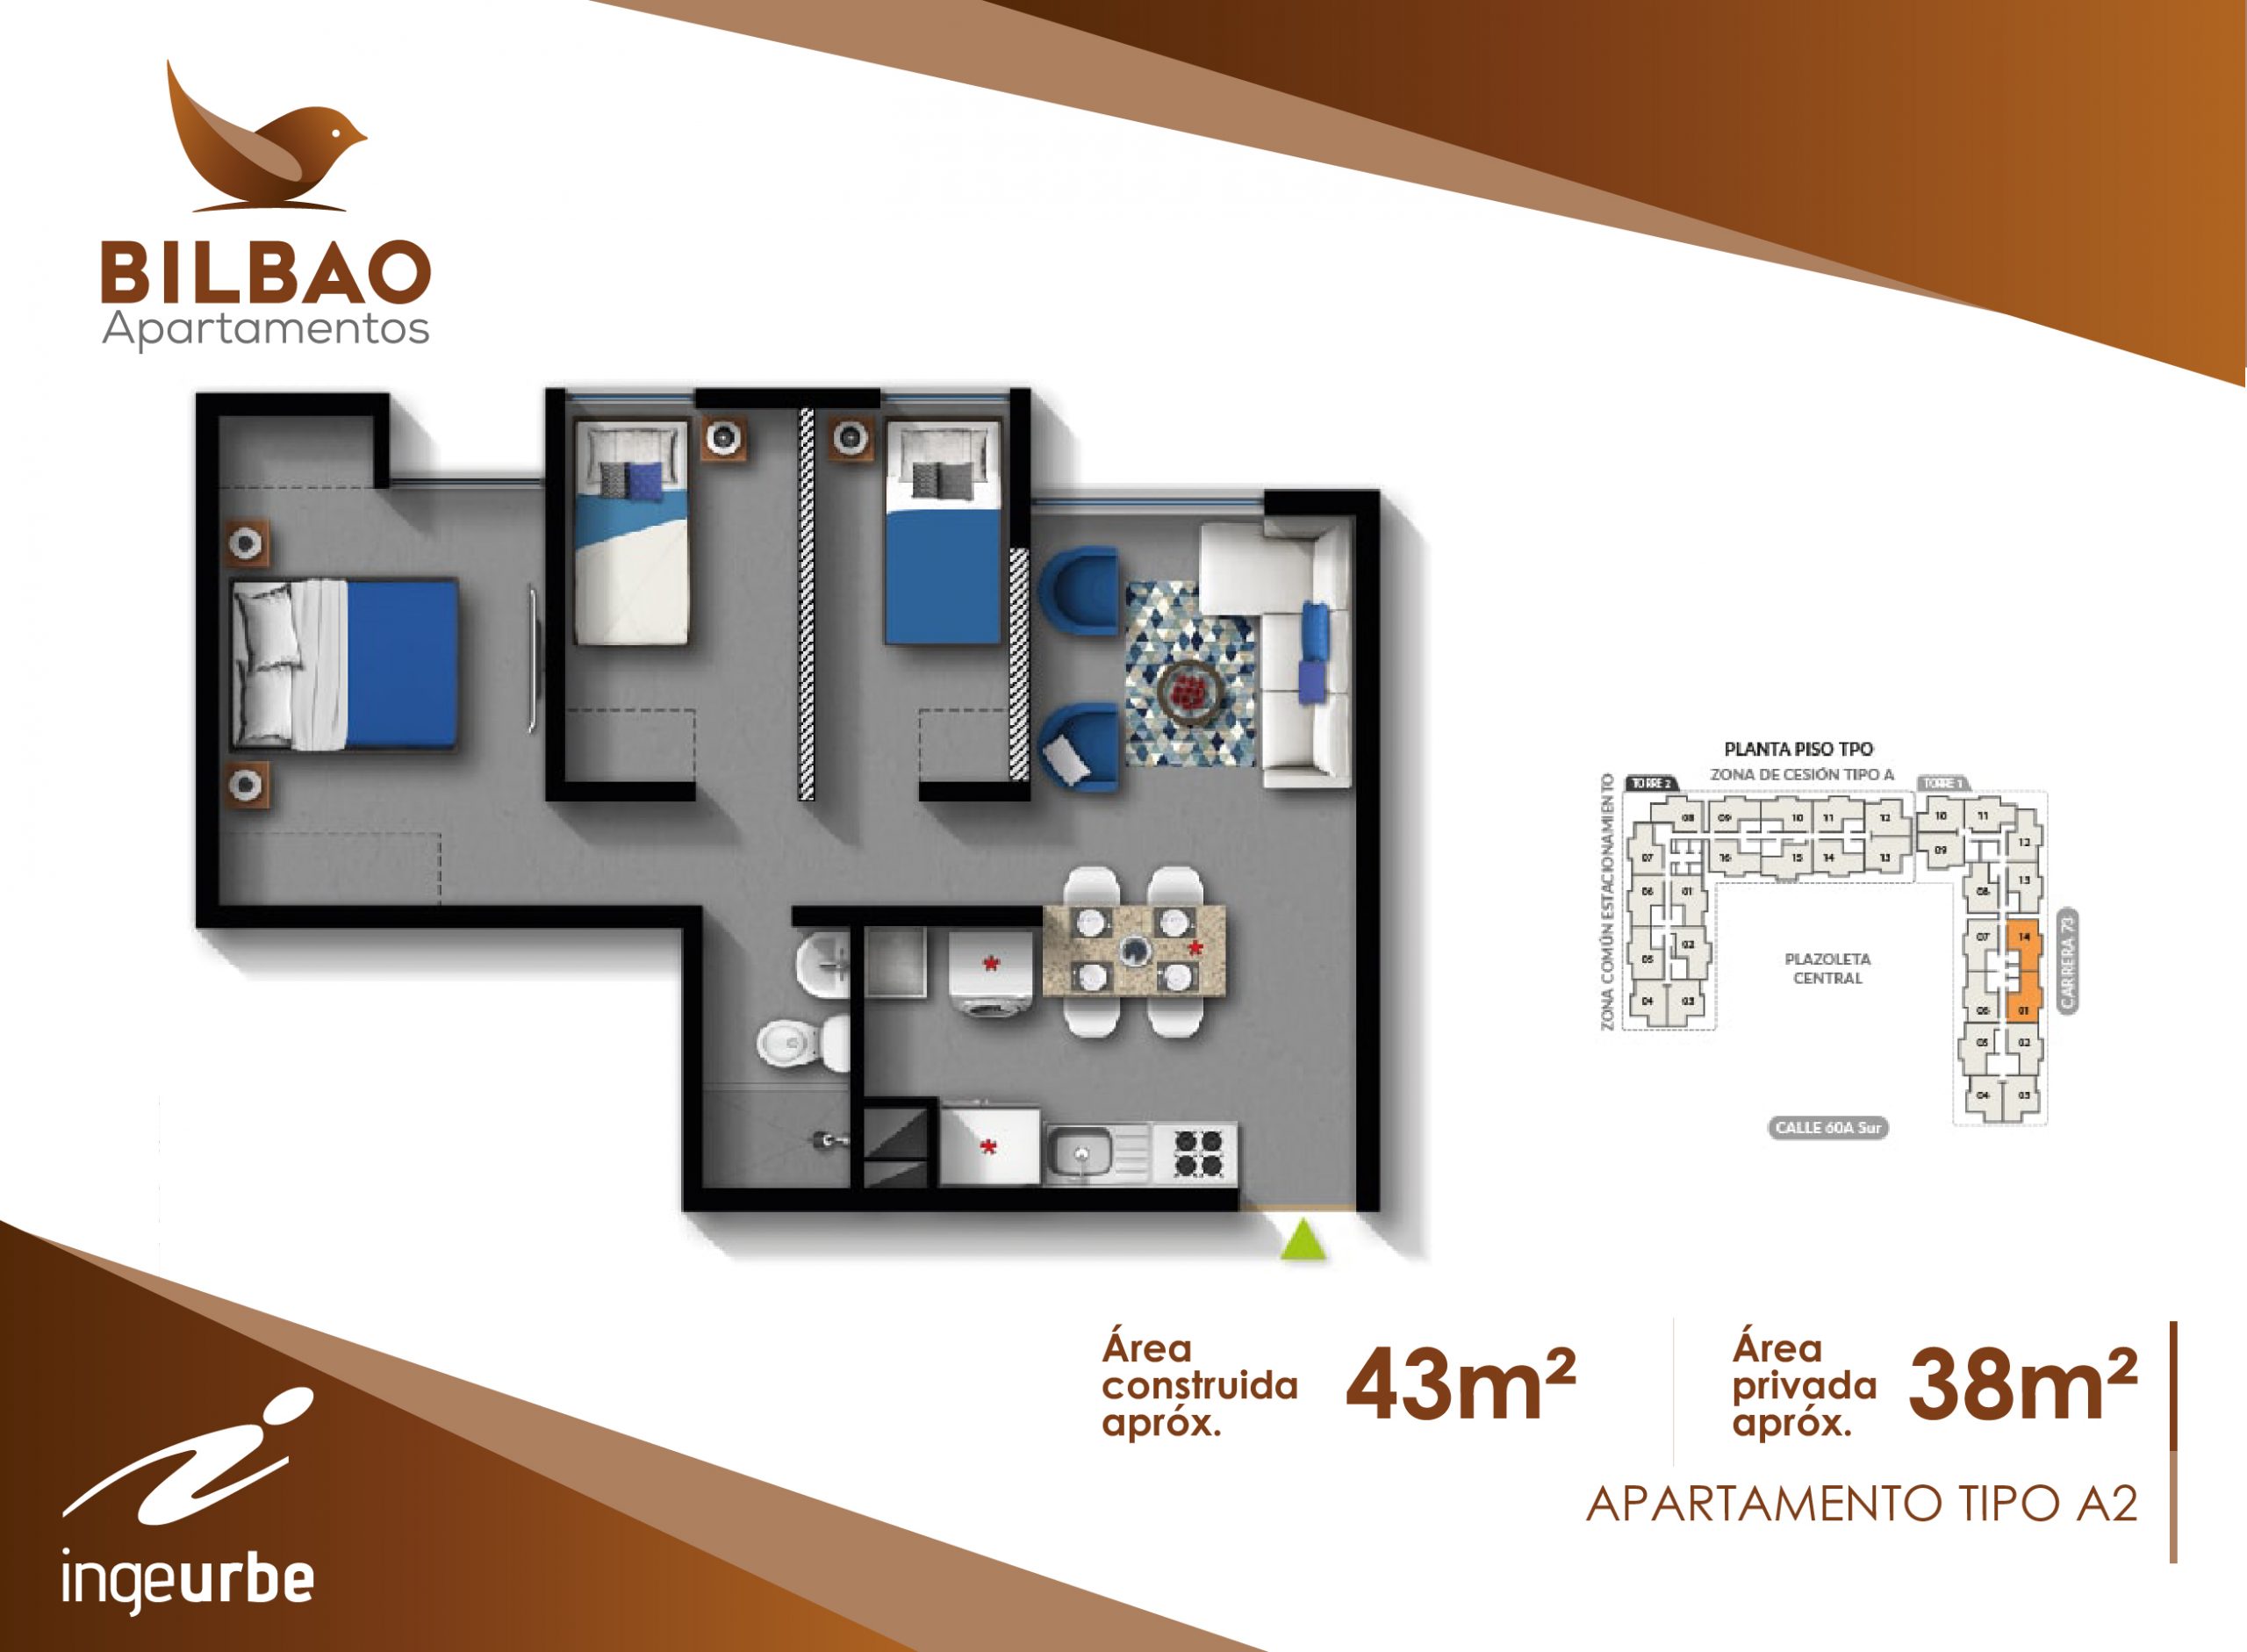 TIPO A2
 
  
   Área construida aprox.:
   43  m2
  
  
   Área privada aprox:
   38  m2